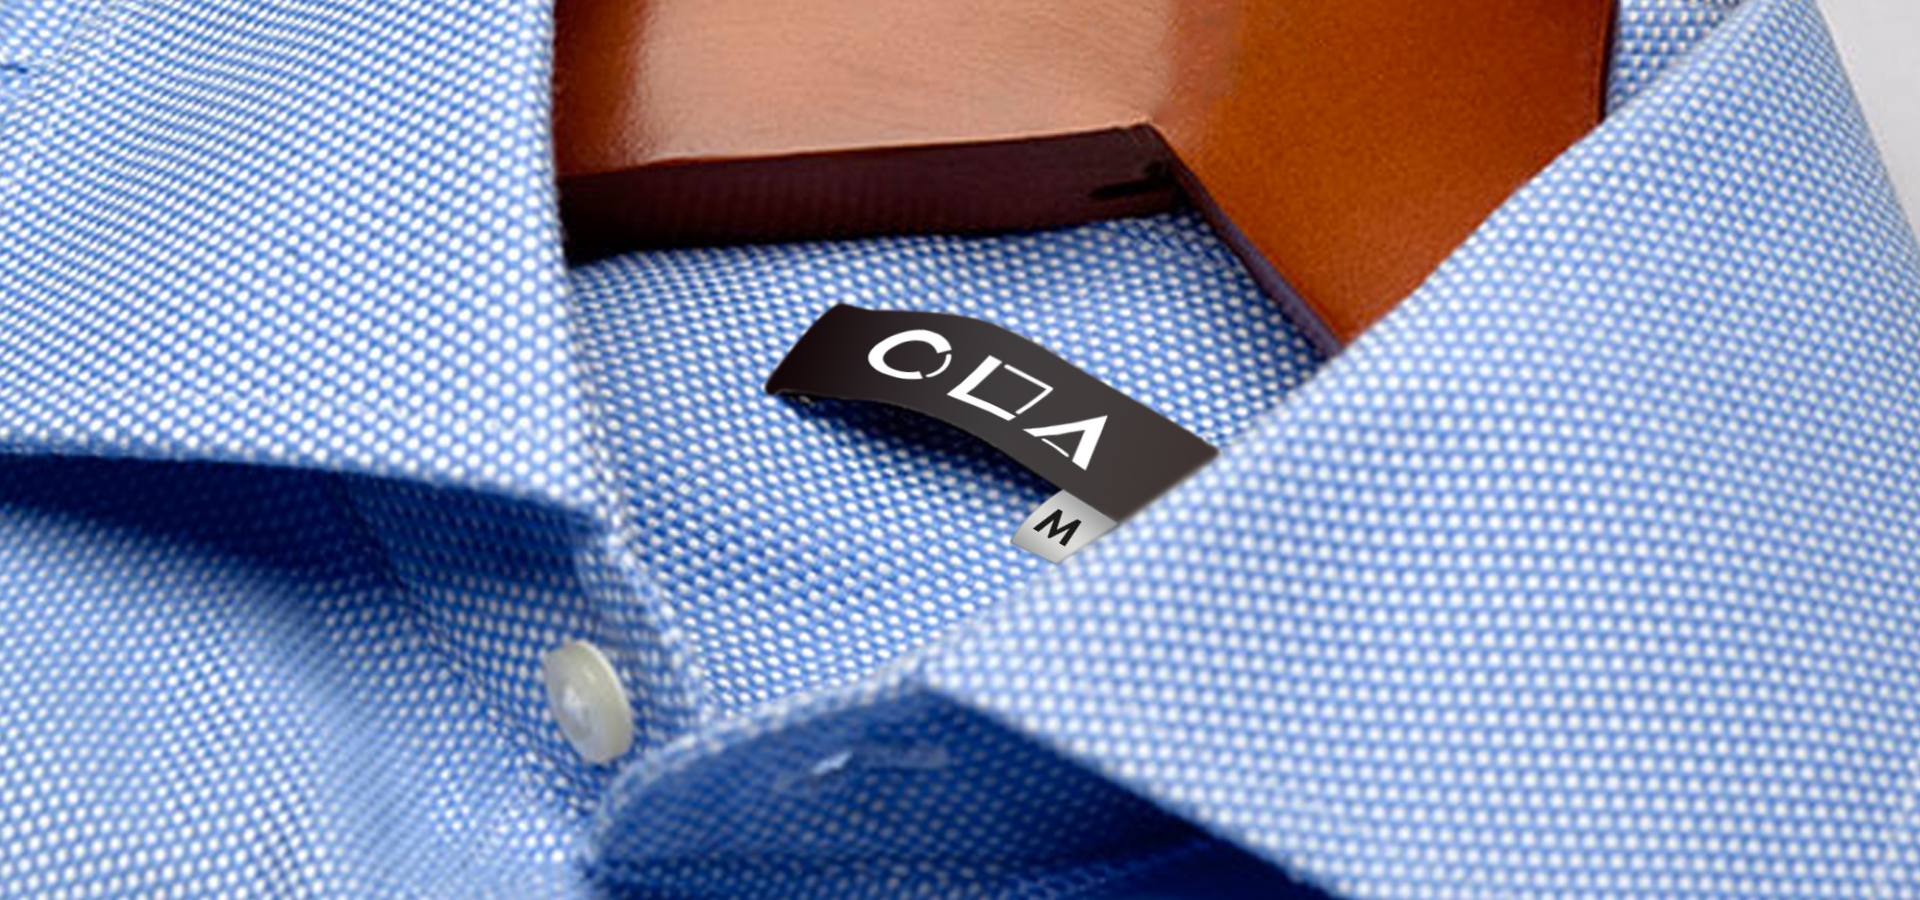 cla 11 1920X900 | CLA服飾電商品牌建構專案 | Labsology 法博思品牌顧問公司